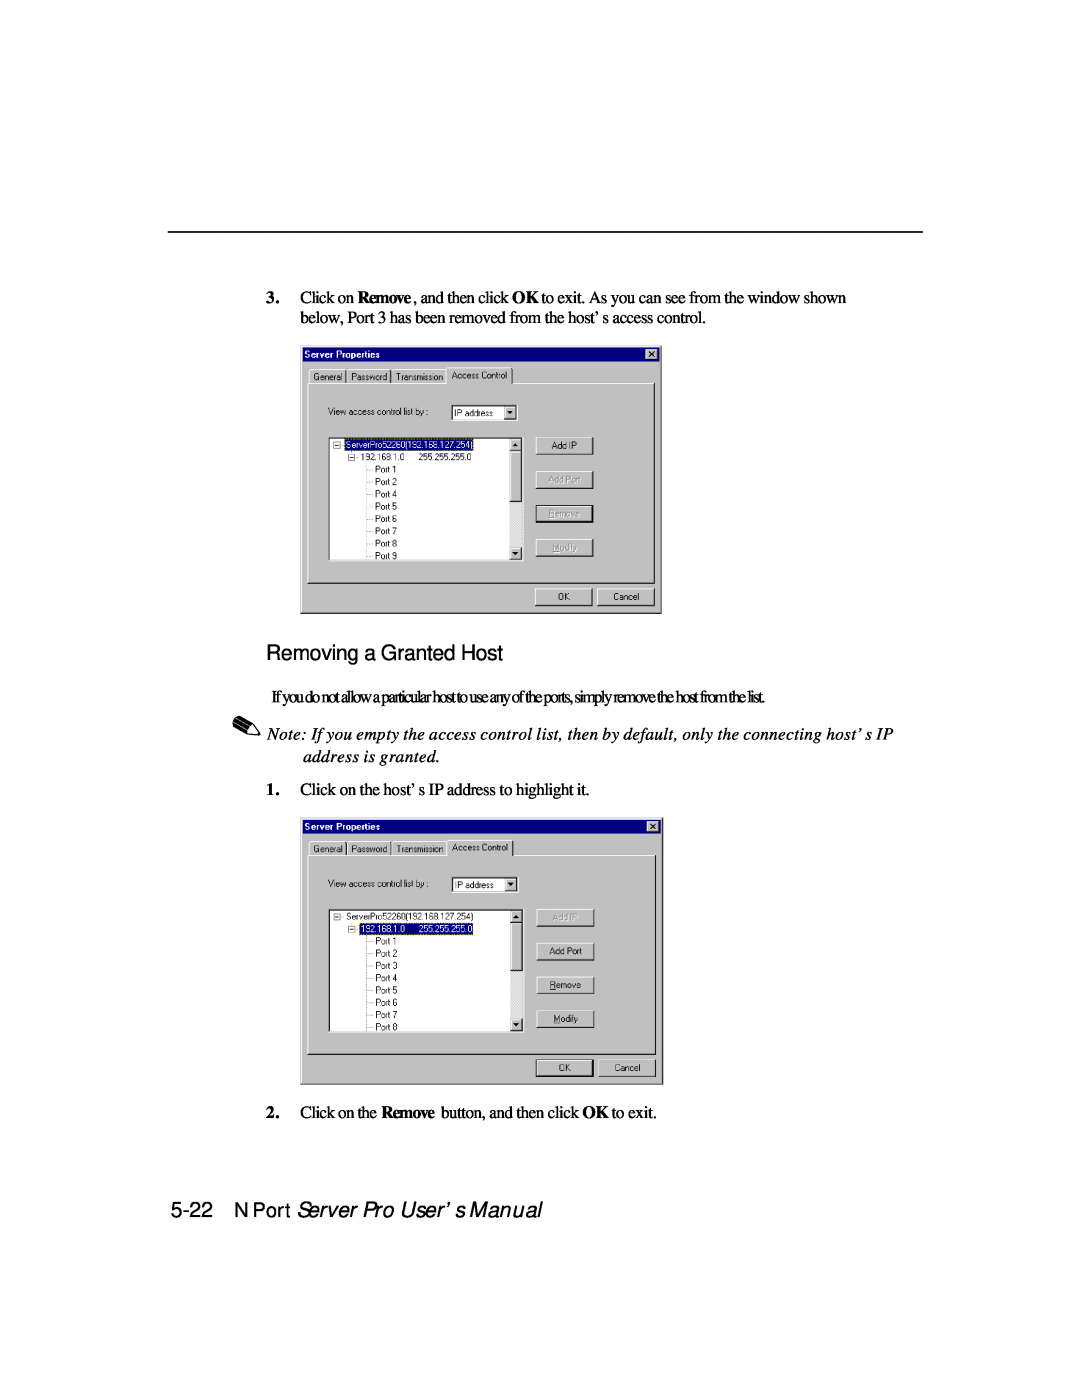 Moxa Technologies DE-303, DE-308 manual Removing a Granted Host, NPort Server Pro User’s Manual 